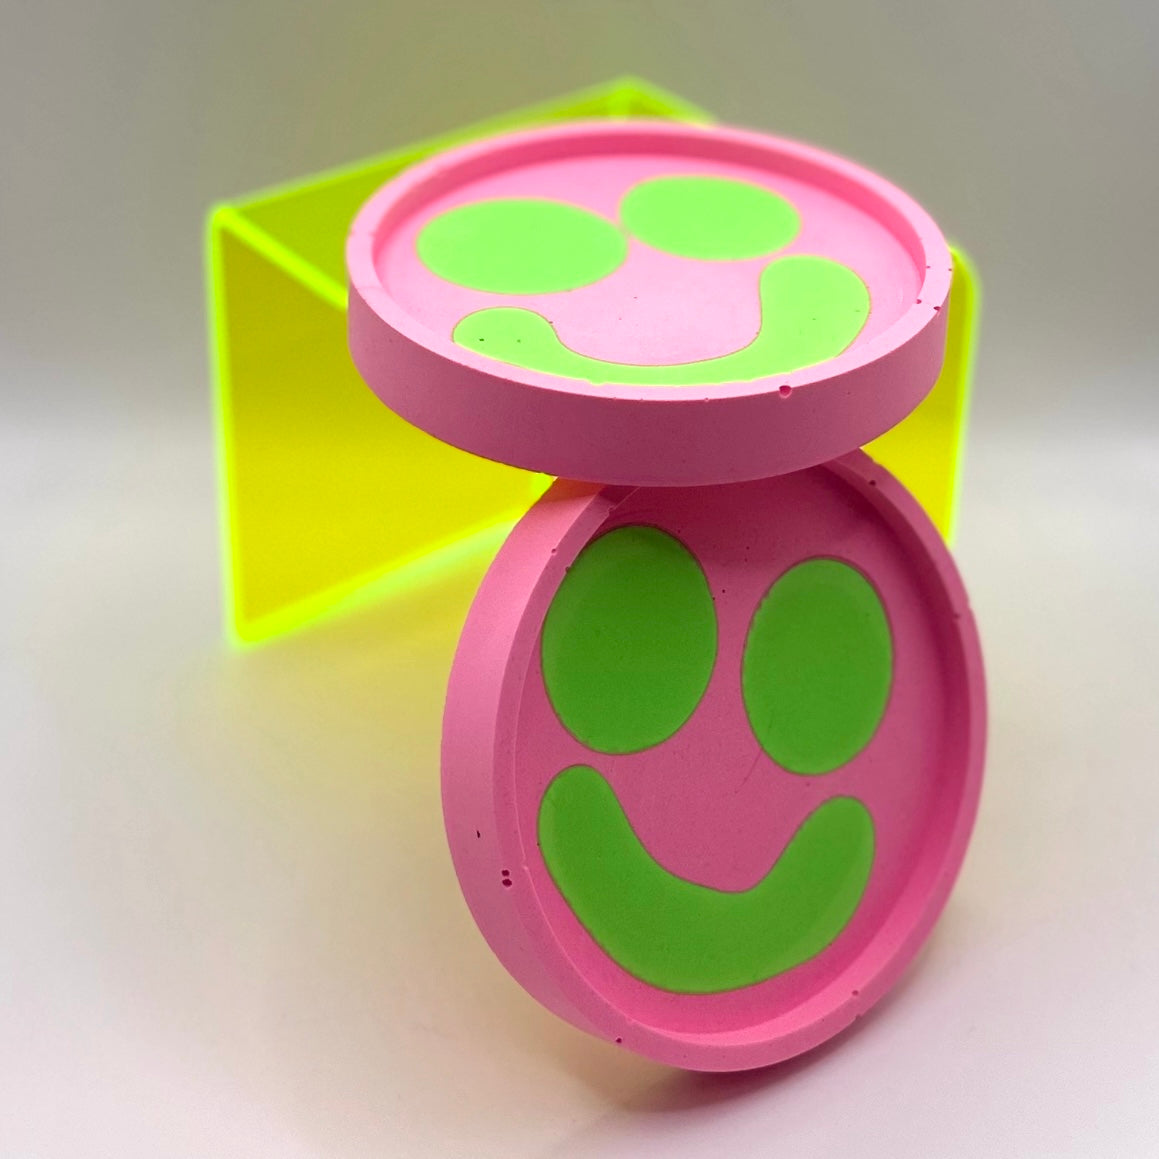 Coaster Set - Smiley - Pink & Green